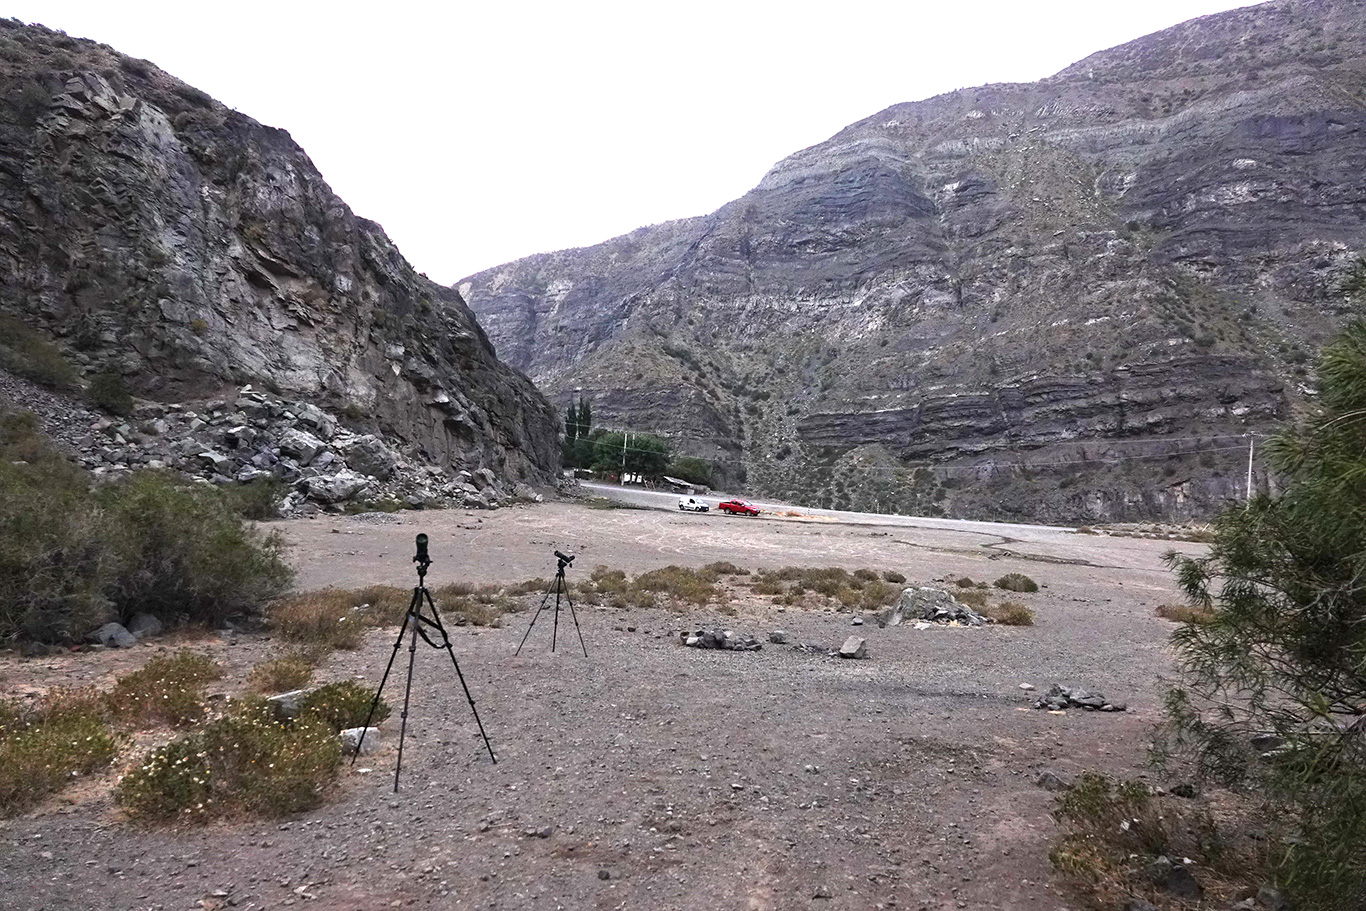  Habitat of Crag Chilia, Camino Embalse El Yeso, Chile.